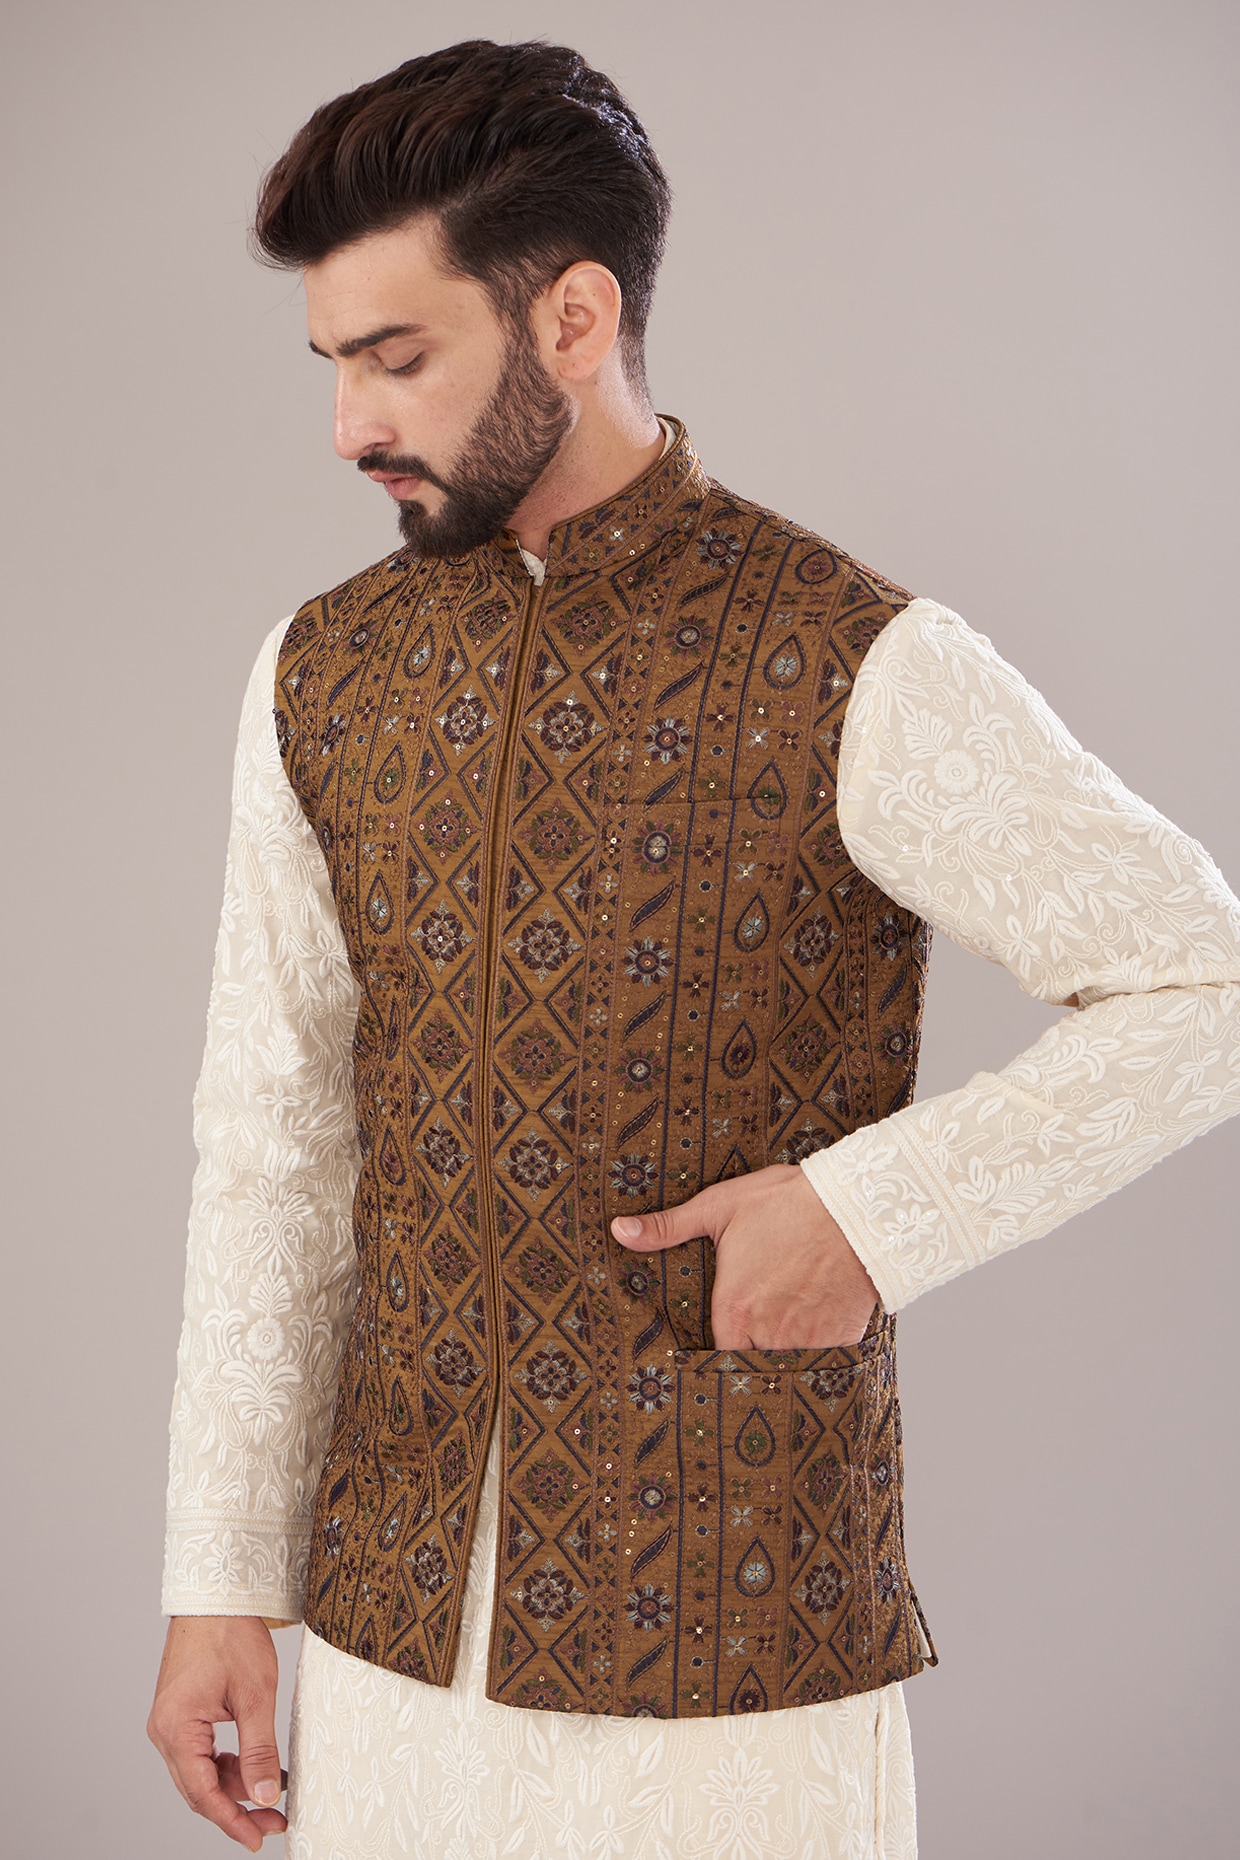 Buy Aeram Fashion Men's Silk Blend Nehru Jacket with Solid Pattern- Mustard  Yellow at Amazon.in